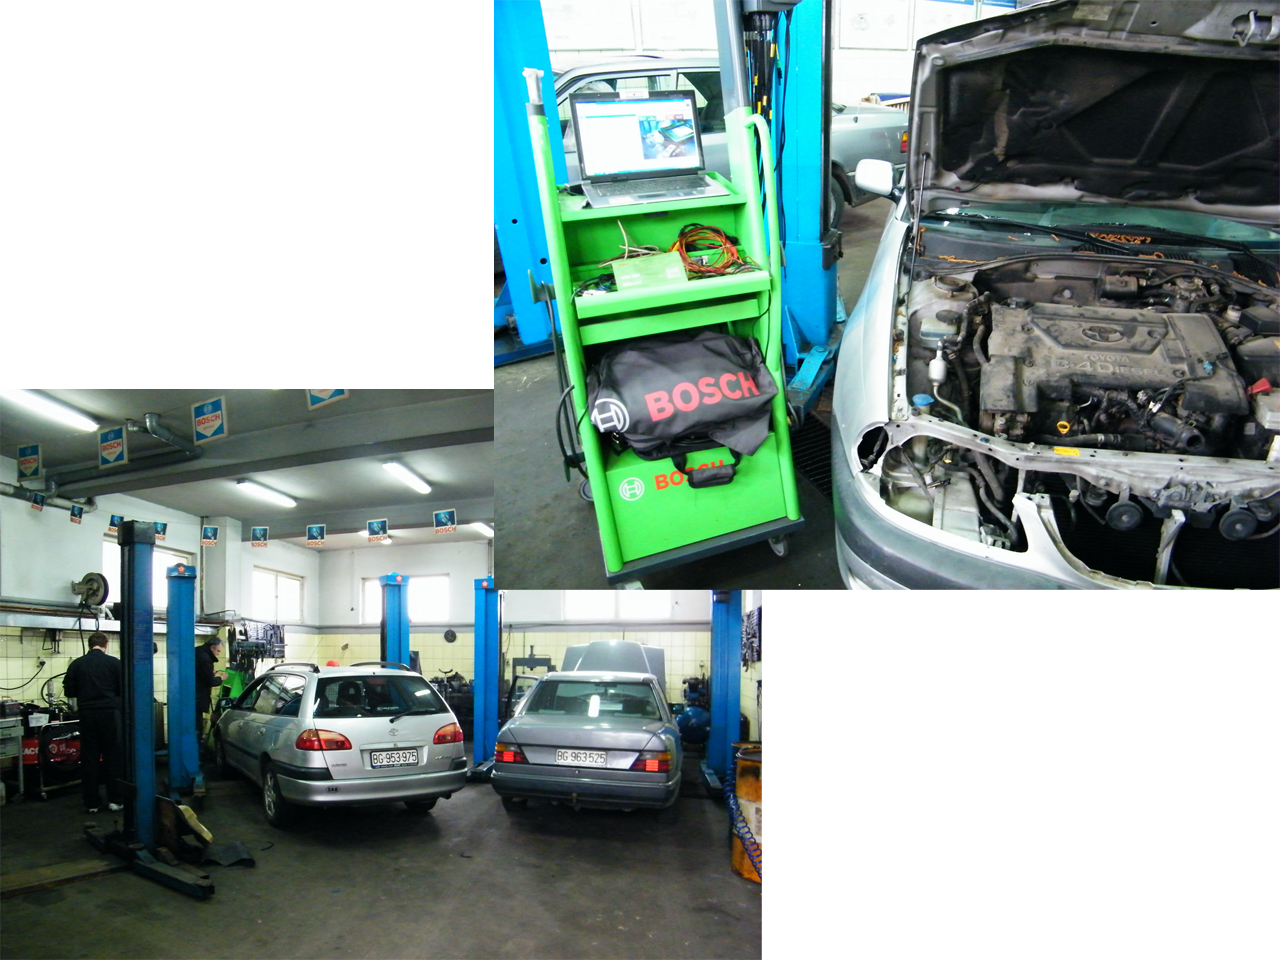 INTERMOBILE BOSCH CAR SERVICE Bosch pumps Belgrade - Photo 1